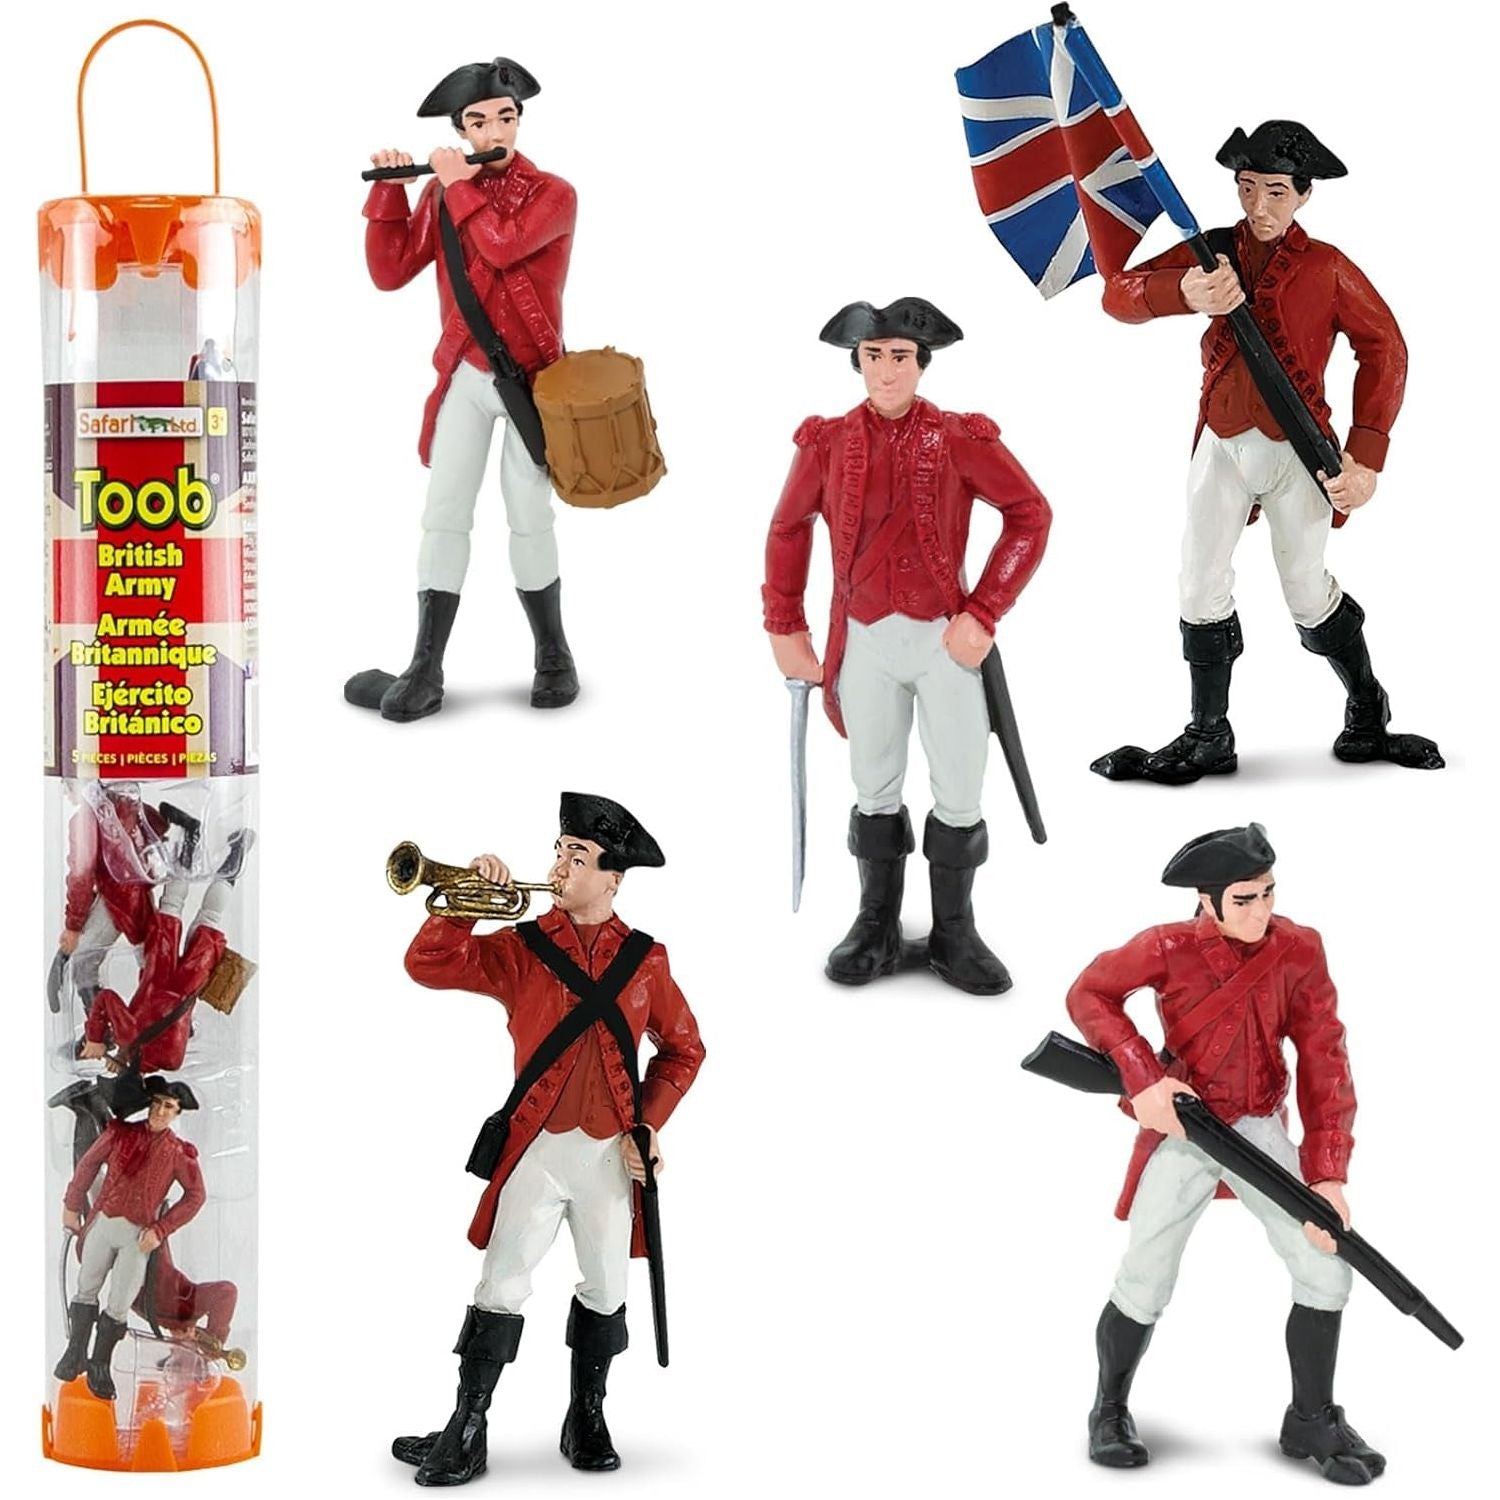 Revolutionary War British Army Miniature Figures